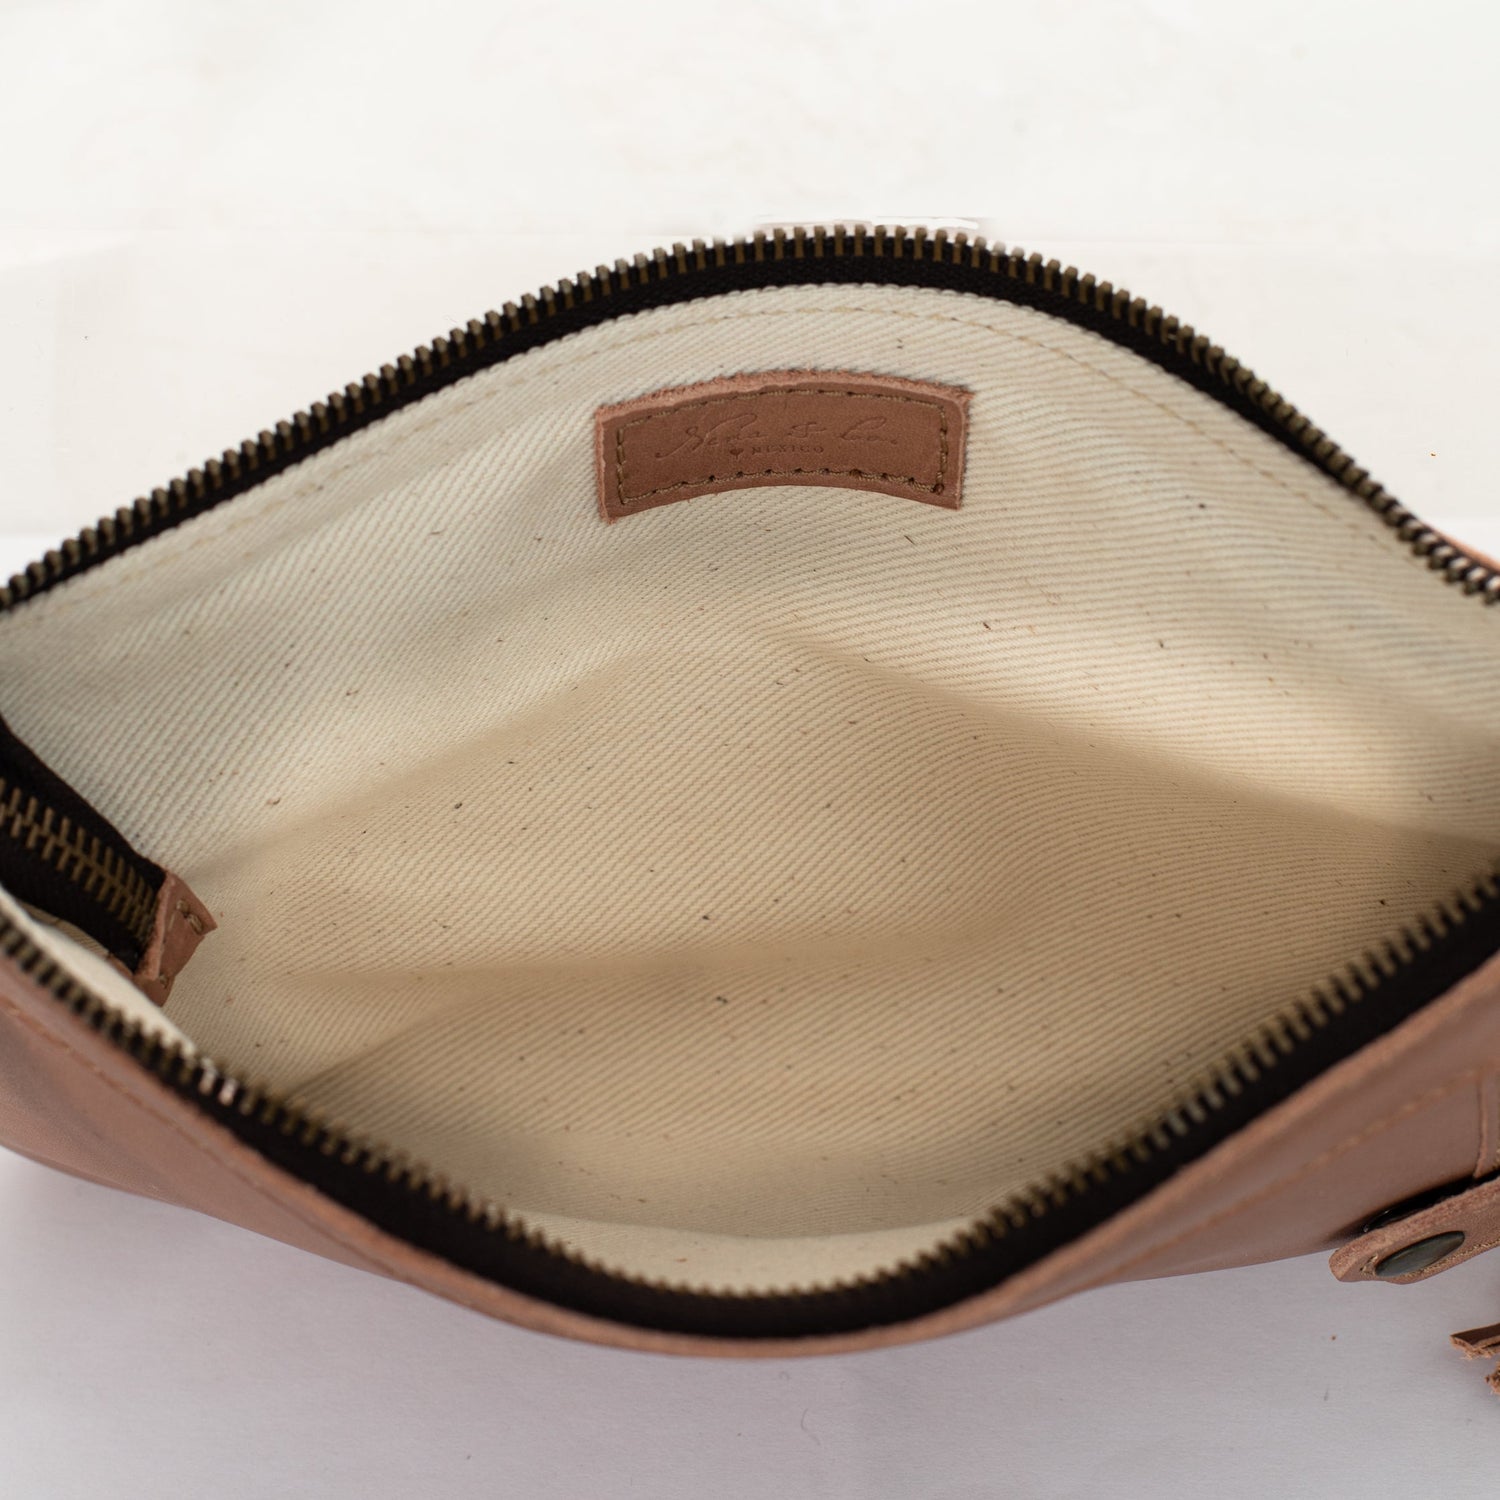 Buy the Lotus ladies' Mirabel handbag online at www.lotusshoes.co.uk